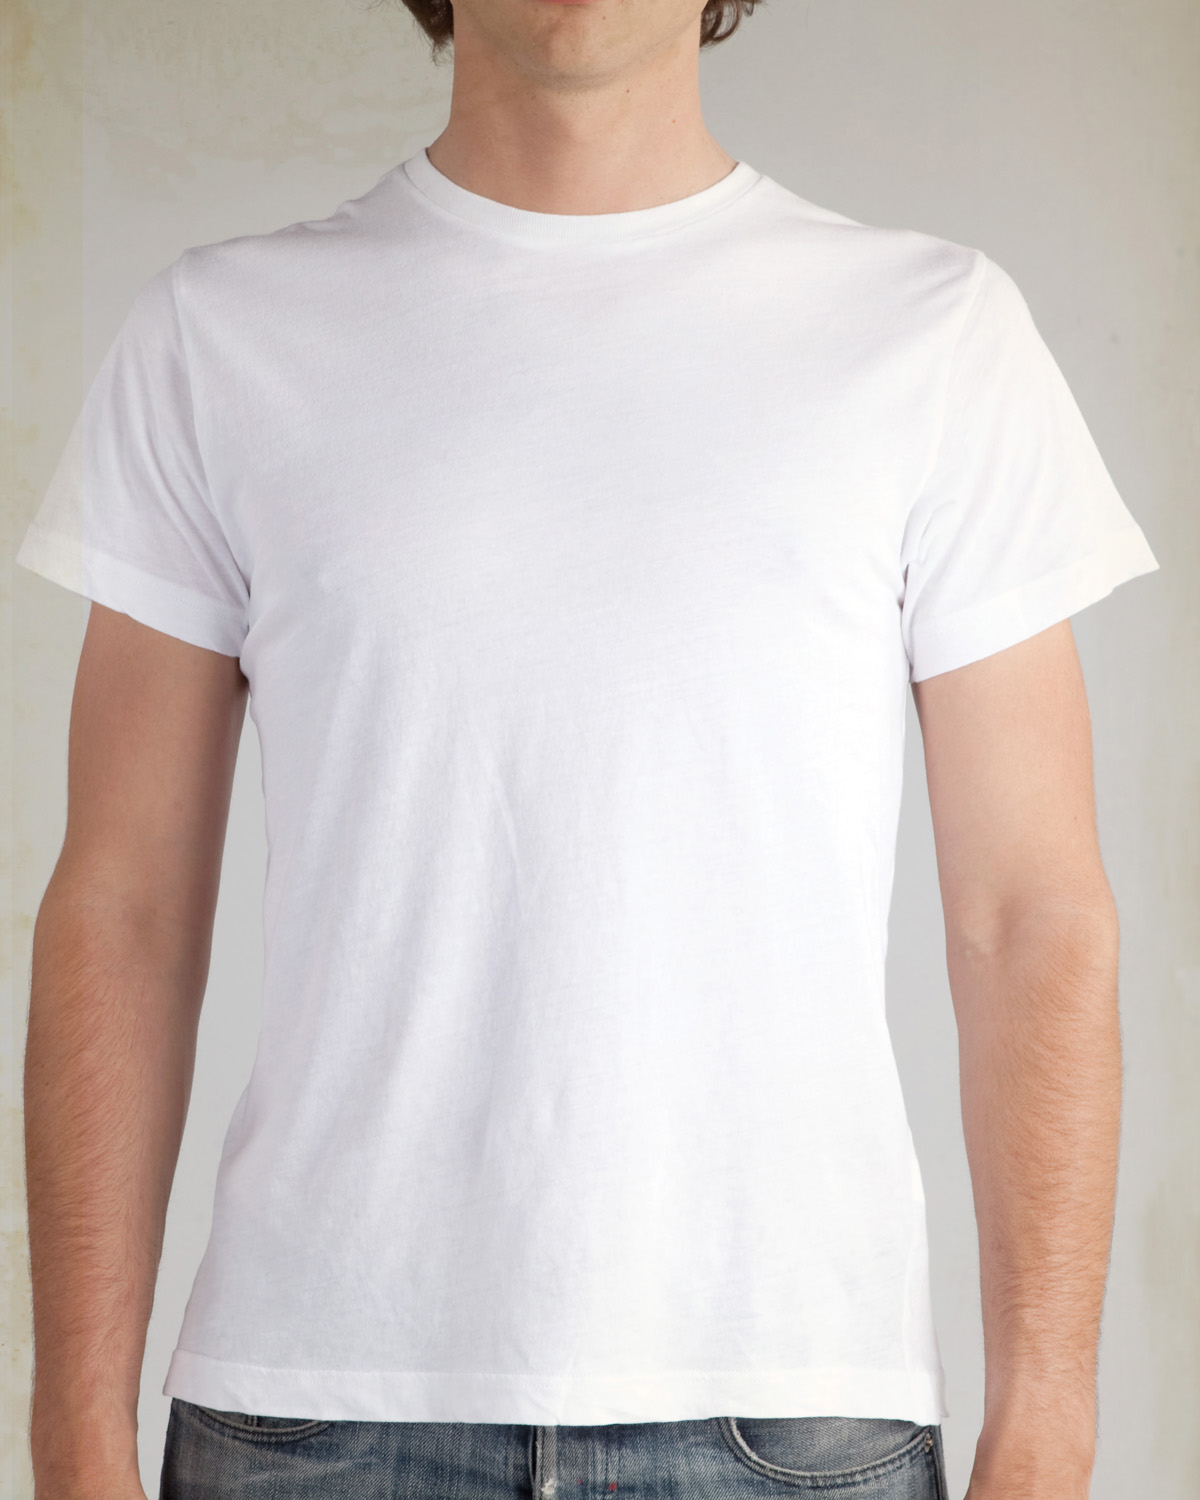 Download Buy Unisex Go To T Shirt Alternative Online At Best Price Ca